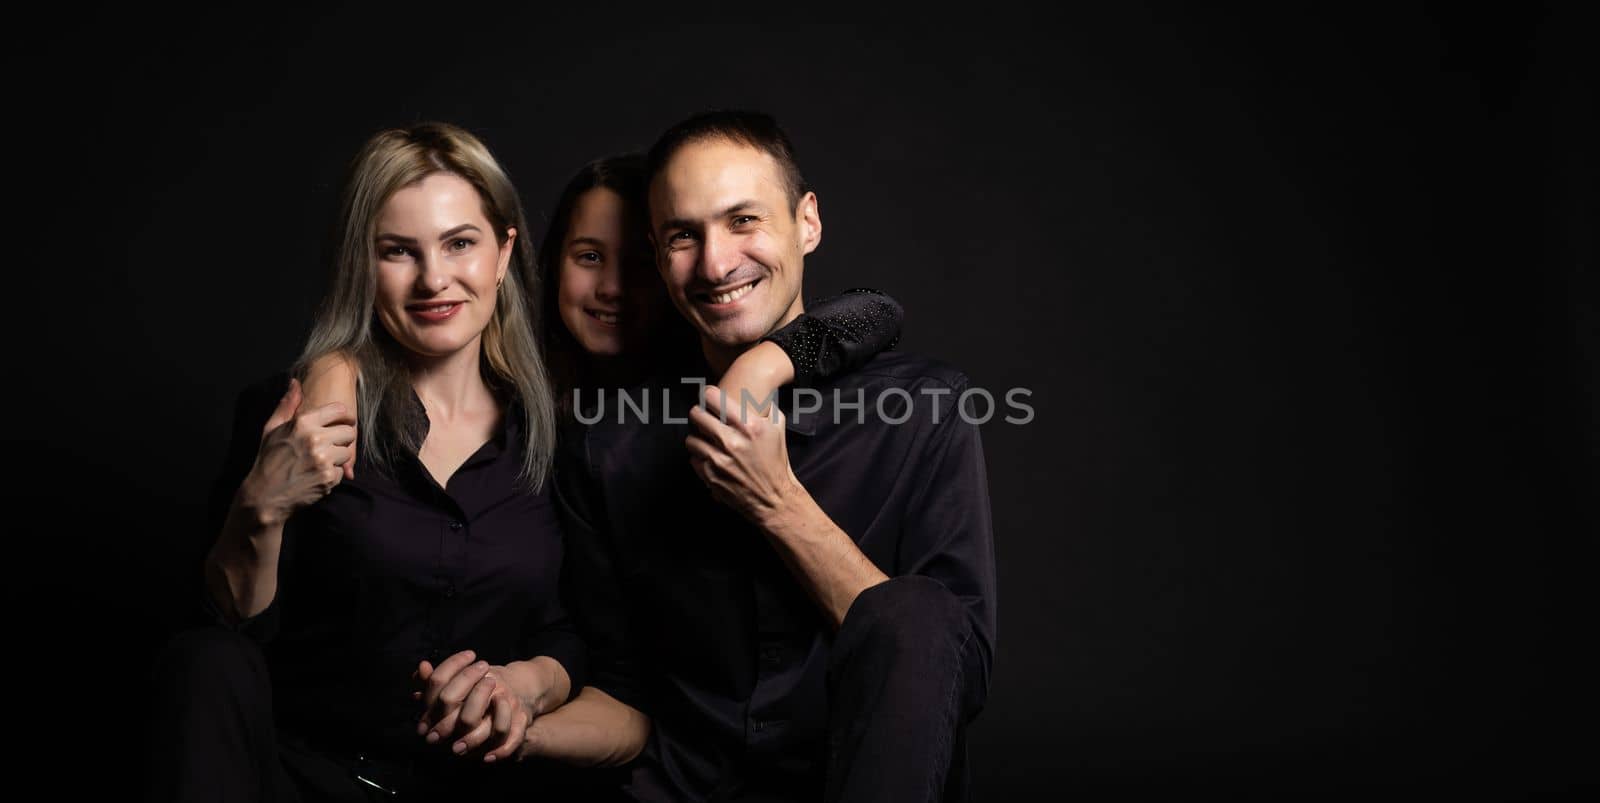 Family portrait on black background.